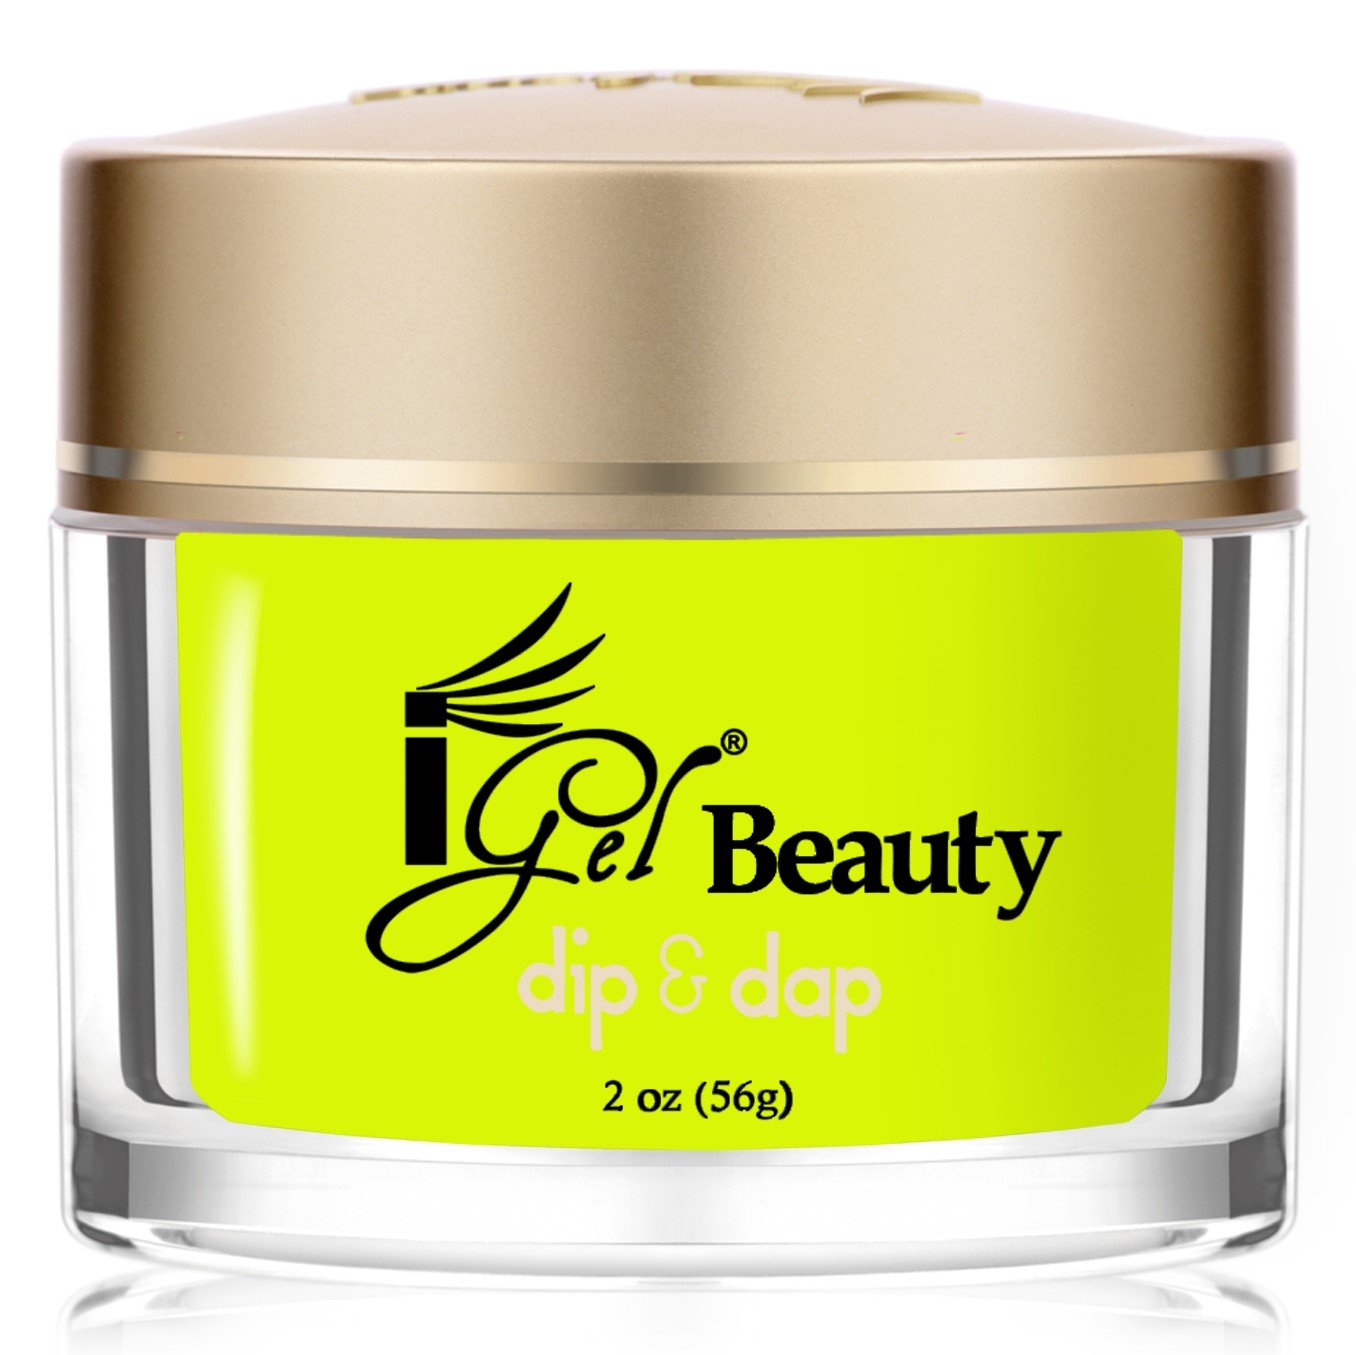 iGel Beauty - Dip & Dap Powder - DD067 Laser Lemon